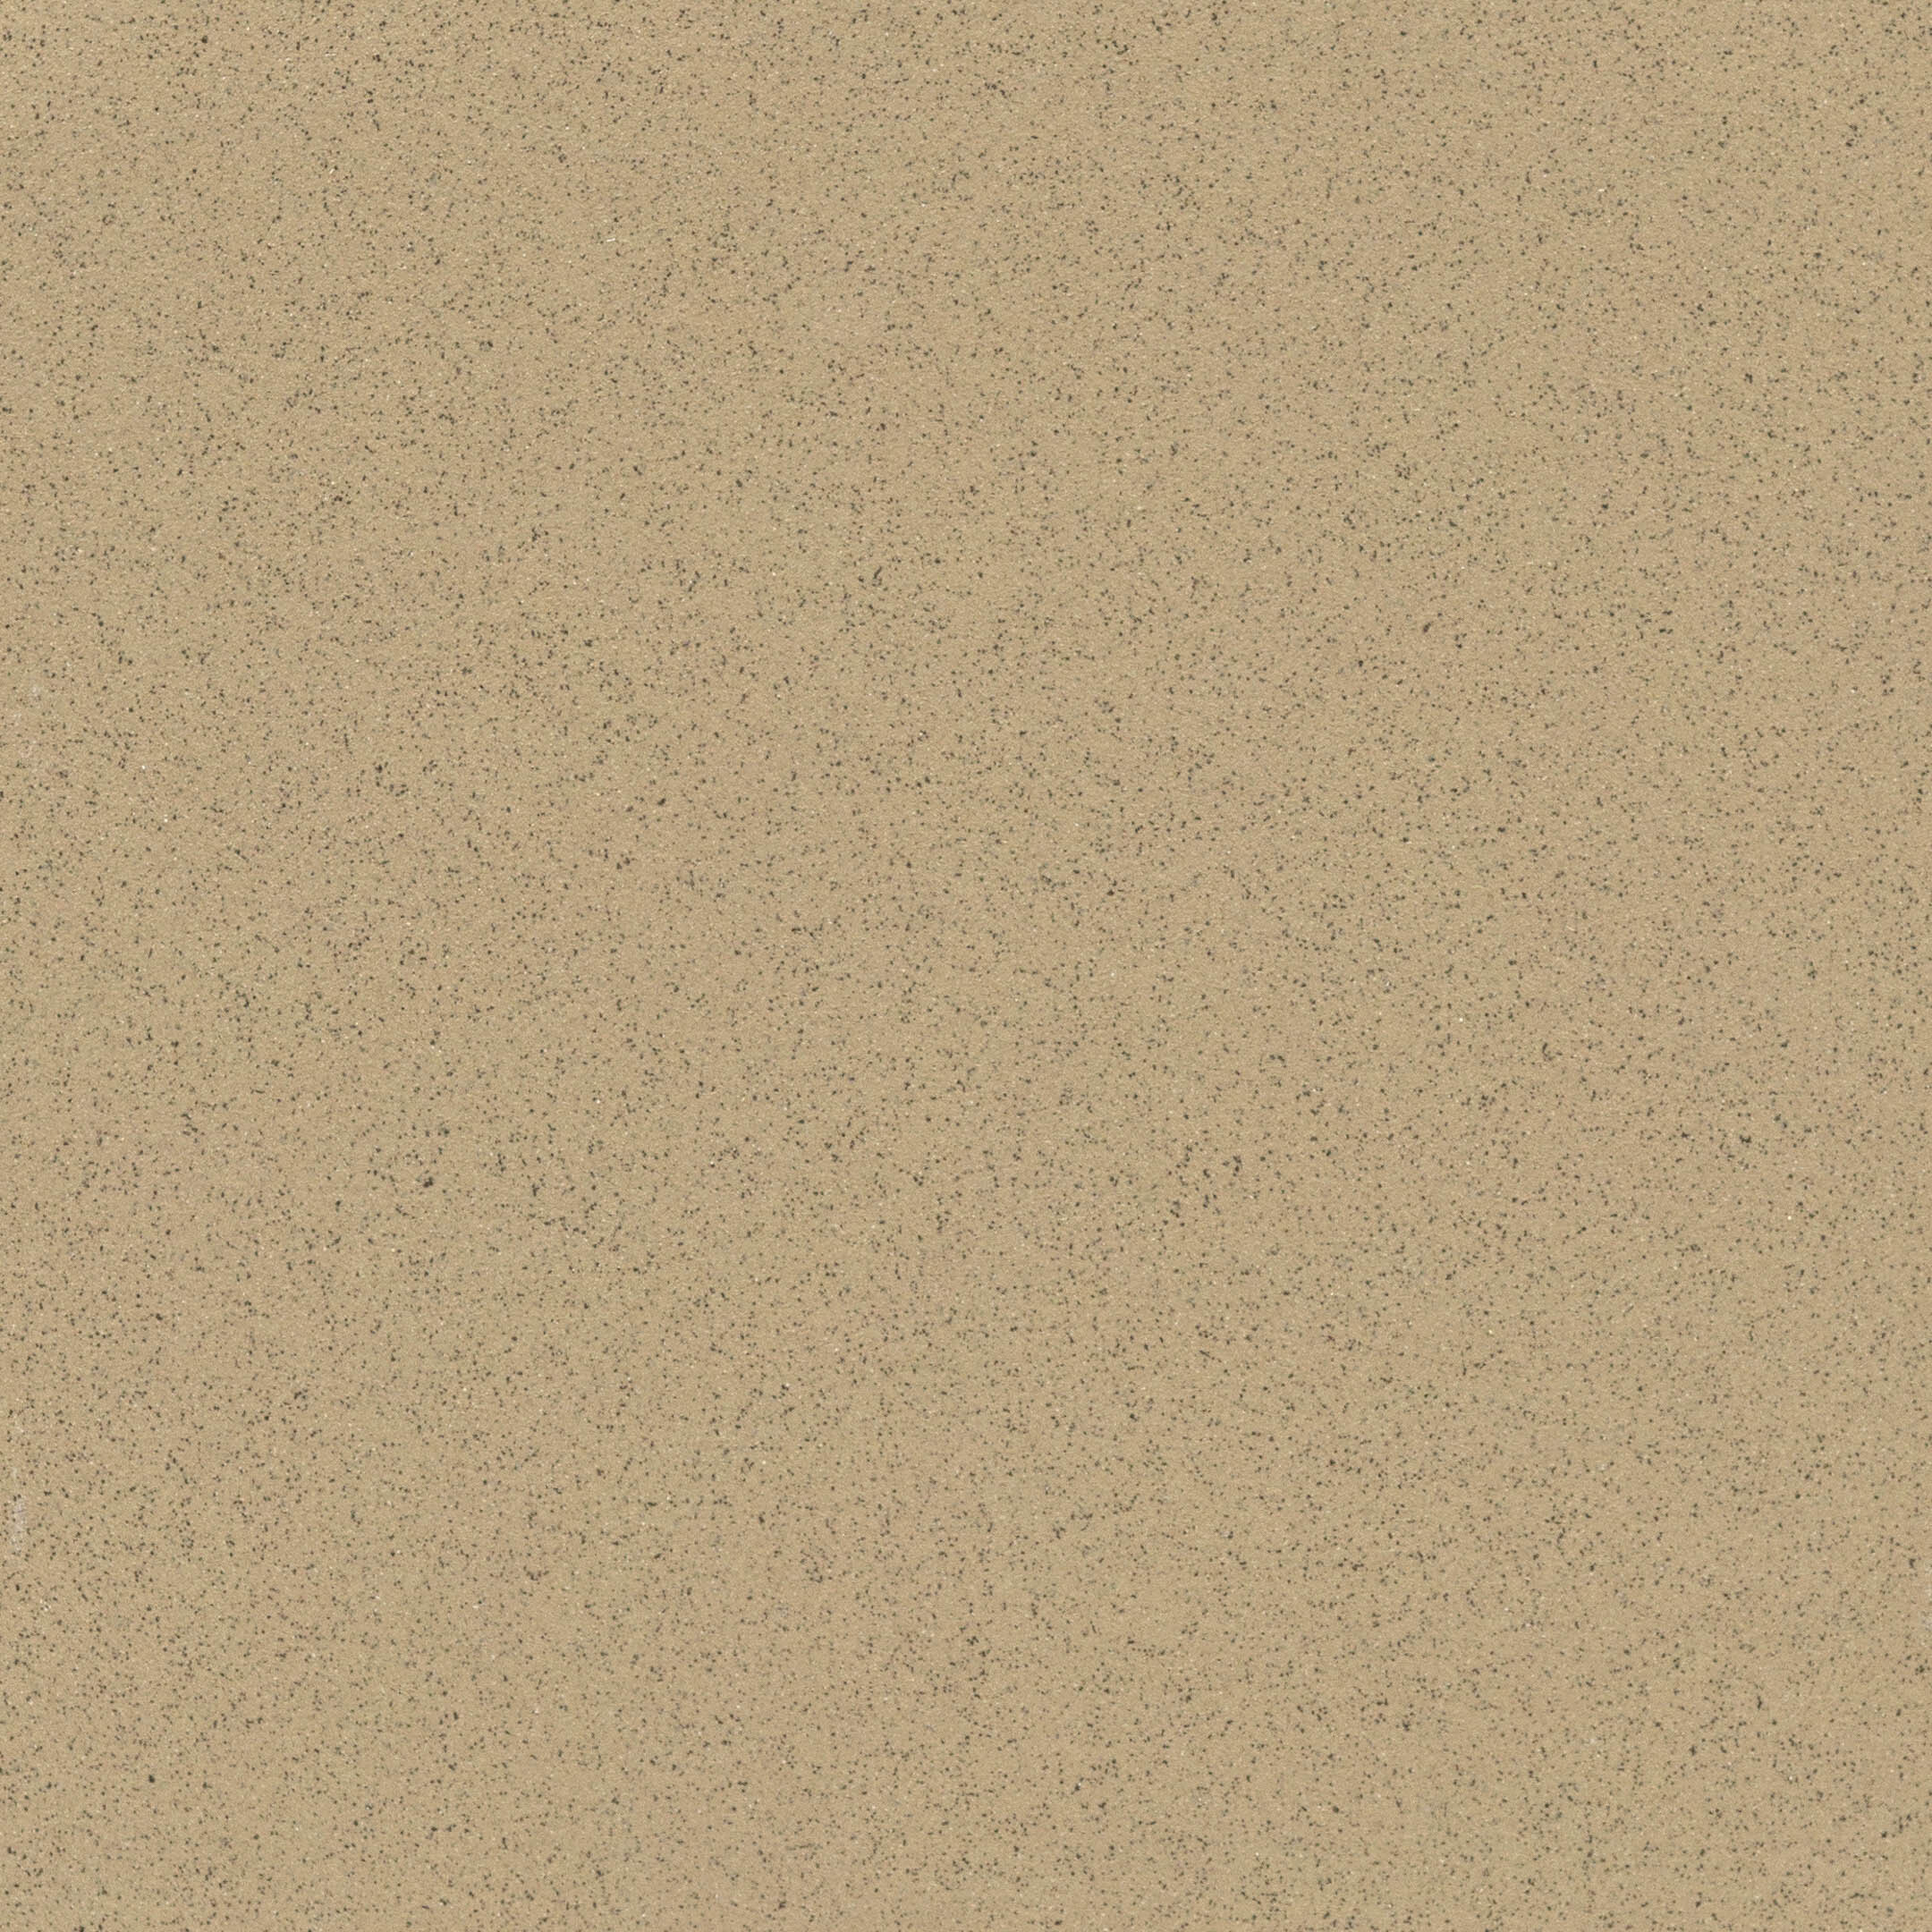 Керамогранит Quadro Decor Грес серый соль-перец 300х300х7 мм (17 шт.=1,53 кв.м) керамогранит quadro decor соль перец 30x30 см 1 53 м² неполированный цвет бежевый